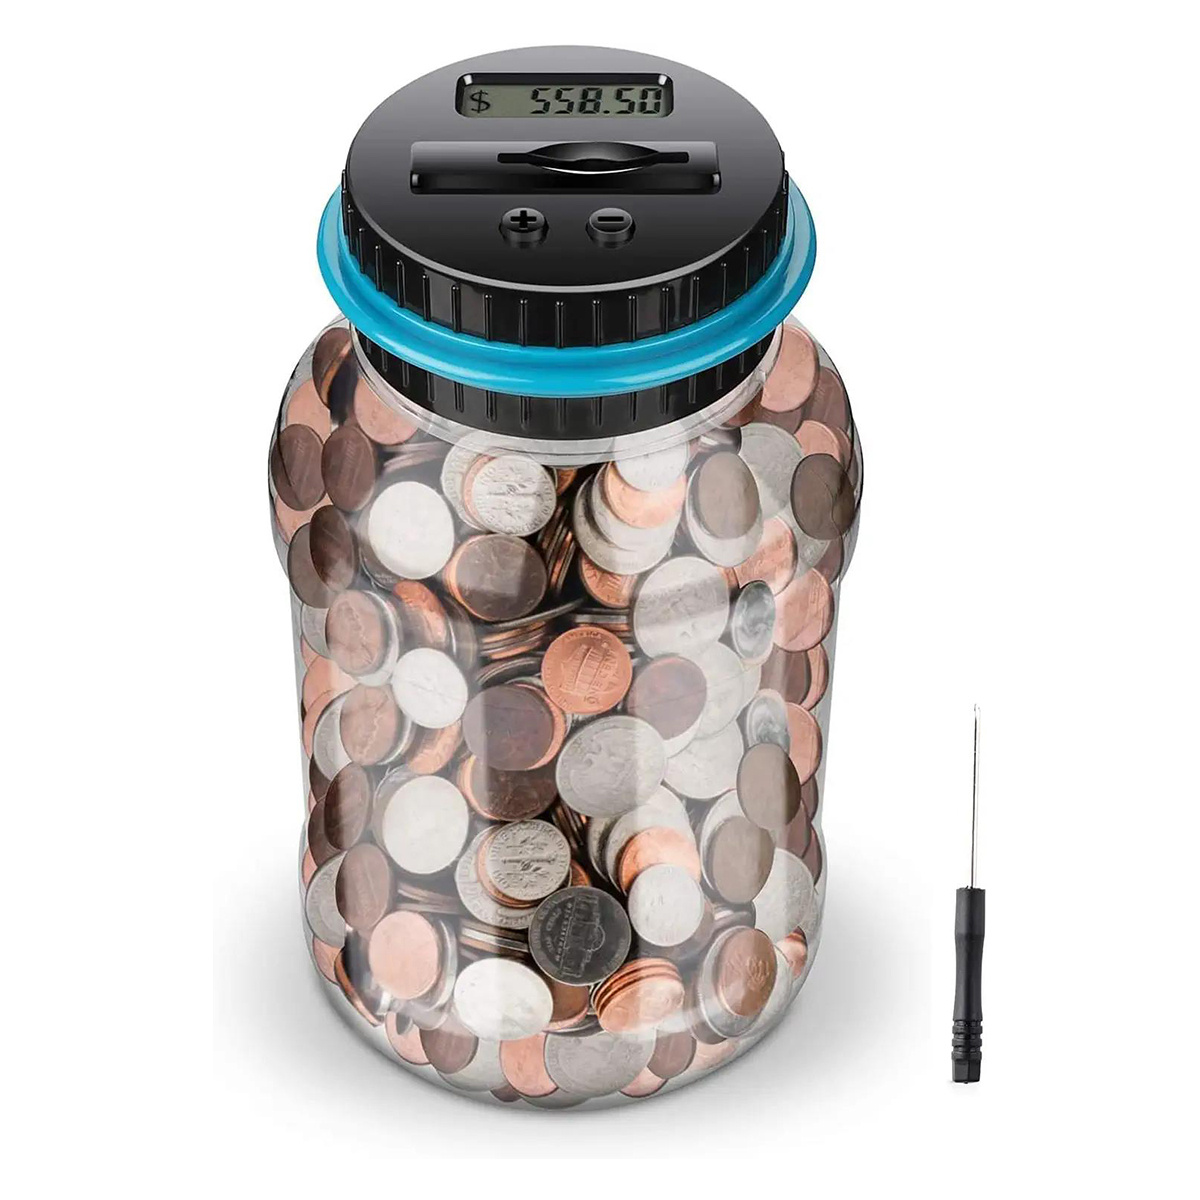 Banco digital para monedas, 2.5 L, hucha contador LCD, para contar,  monedas, banco de dinero (rosa)